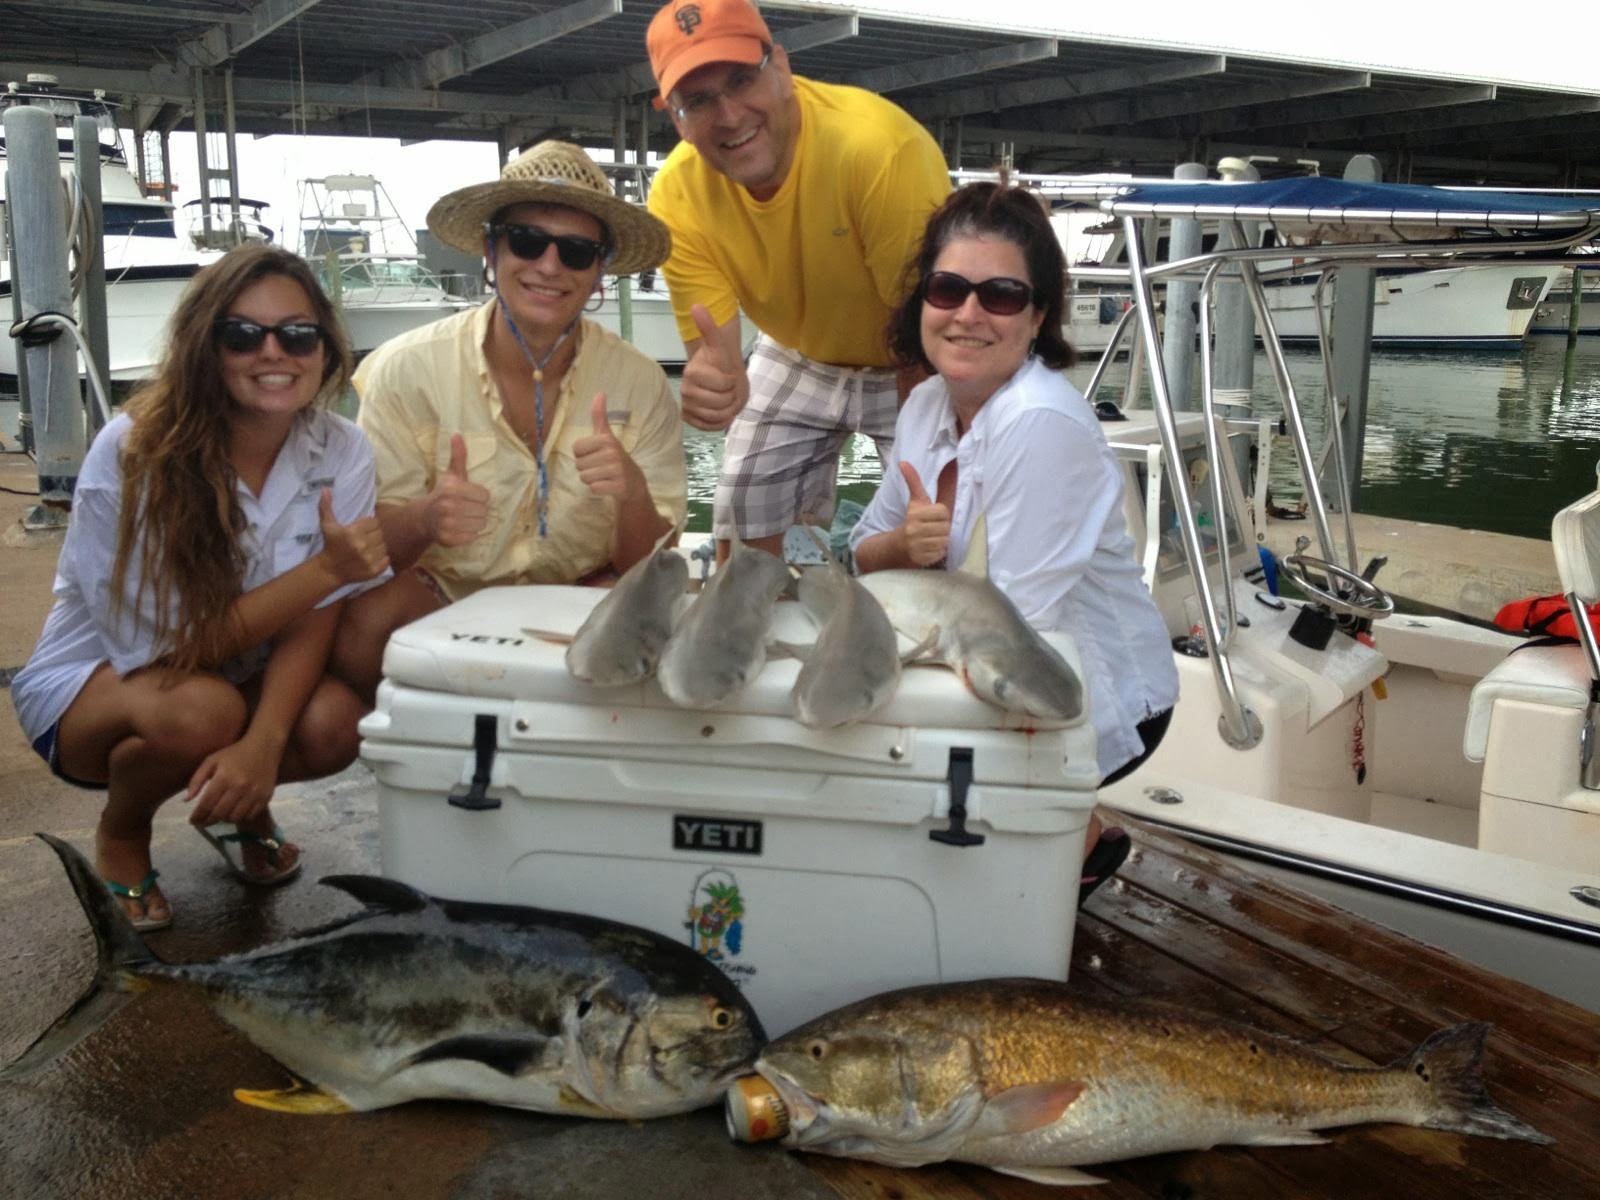 February 2014 Galveston Fishing Charter Company